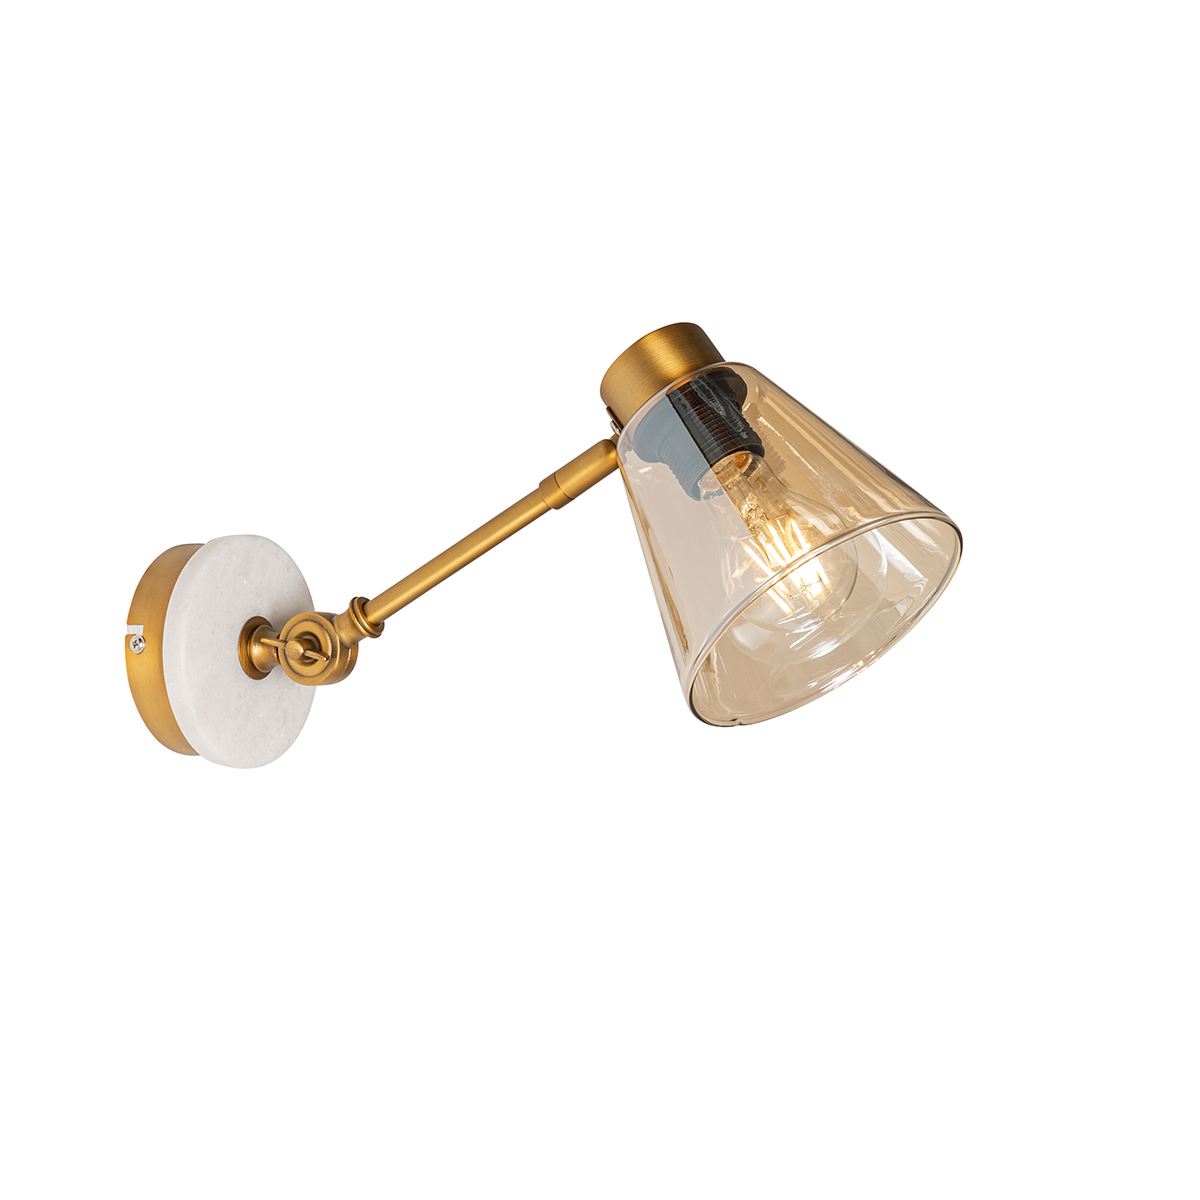 Art deco wandlamp brons met marmer en amber glas - Amber